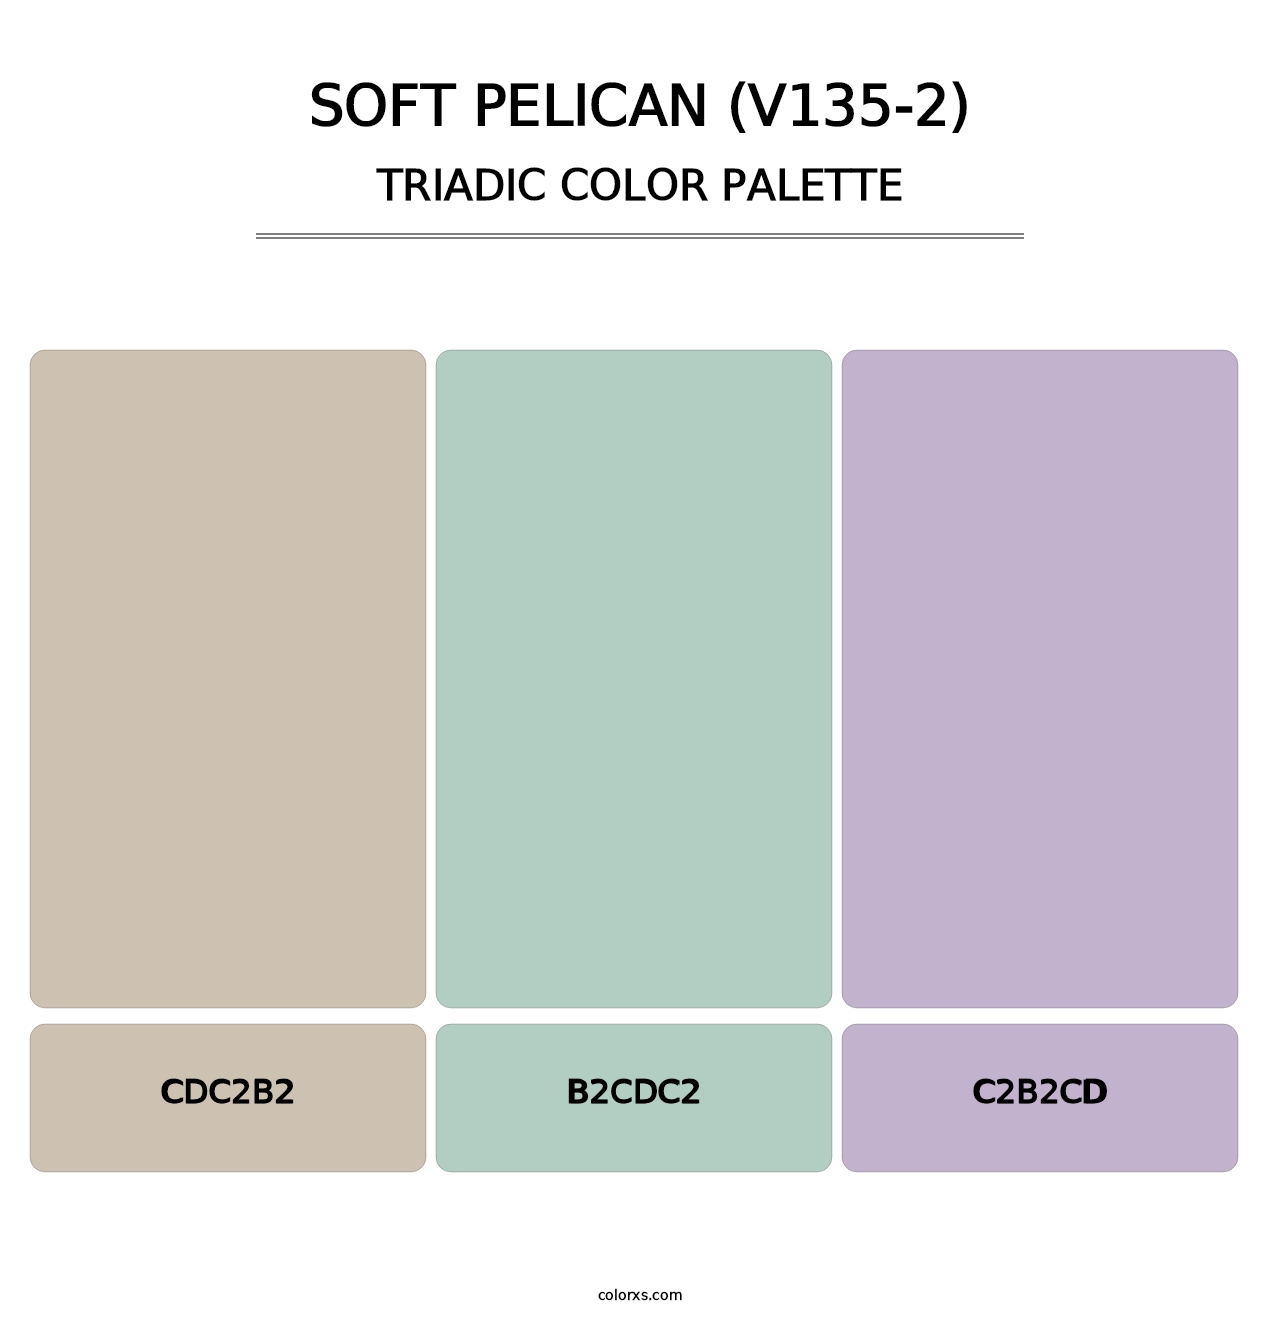 Soft Pelican (V135-2) - Triadic Color Palette